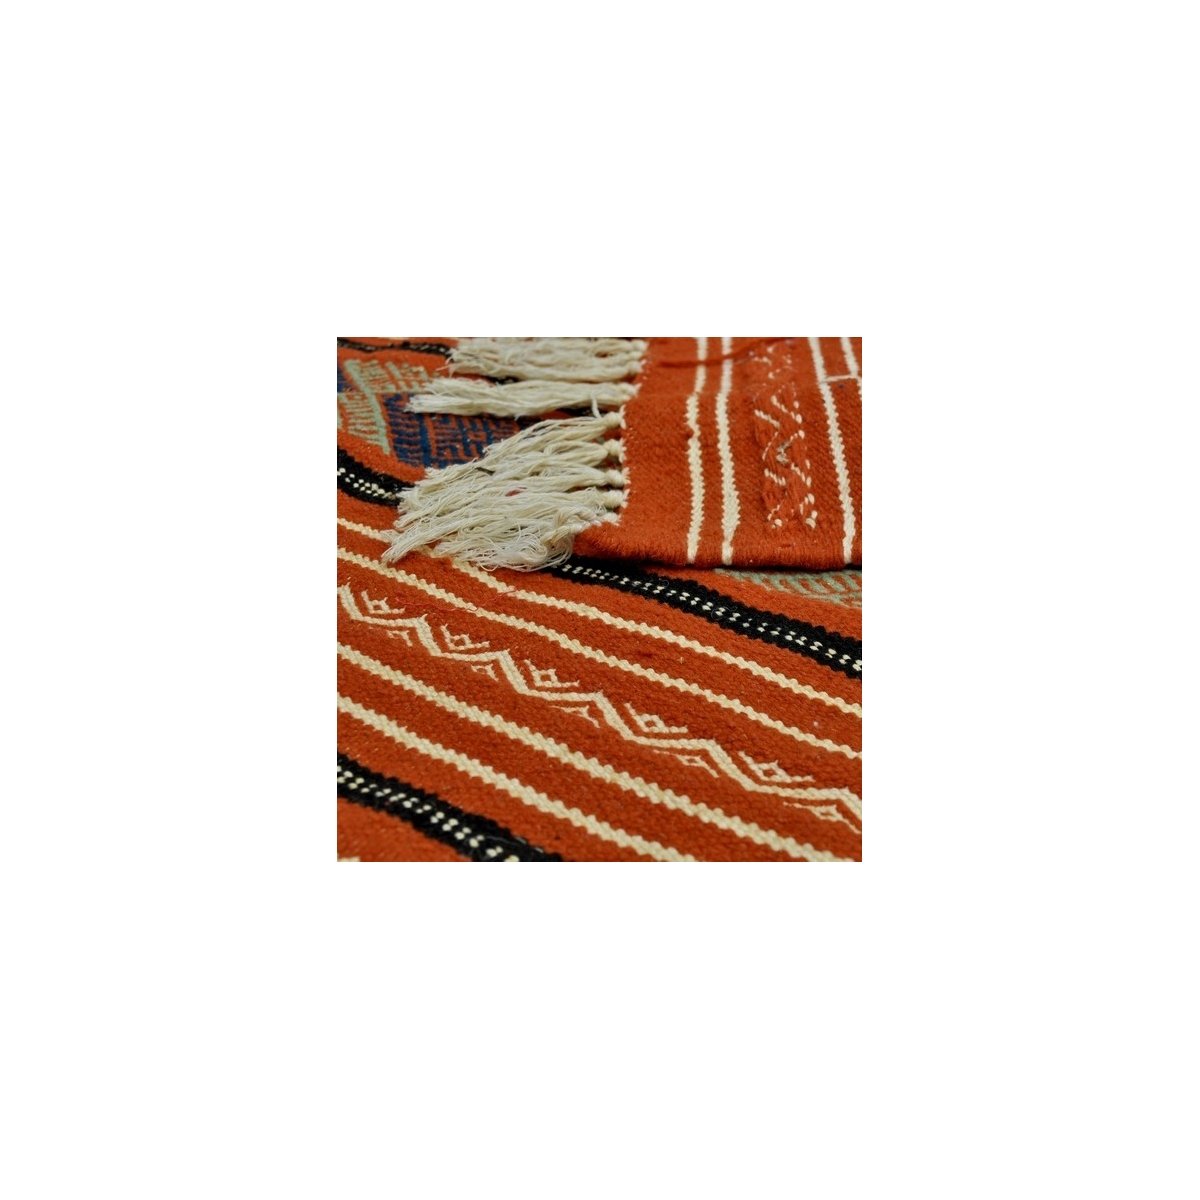 Tapis berbère Tapis Kilim Tapis Beskra 60x100 Multicolore (Tissé main, Laine, Tunisie) Tapis kilim tunisien style tapis marocain